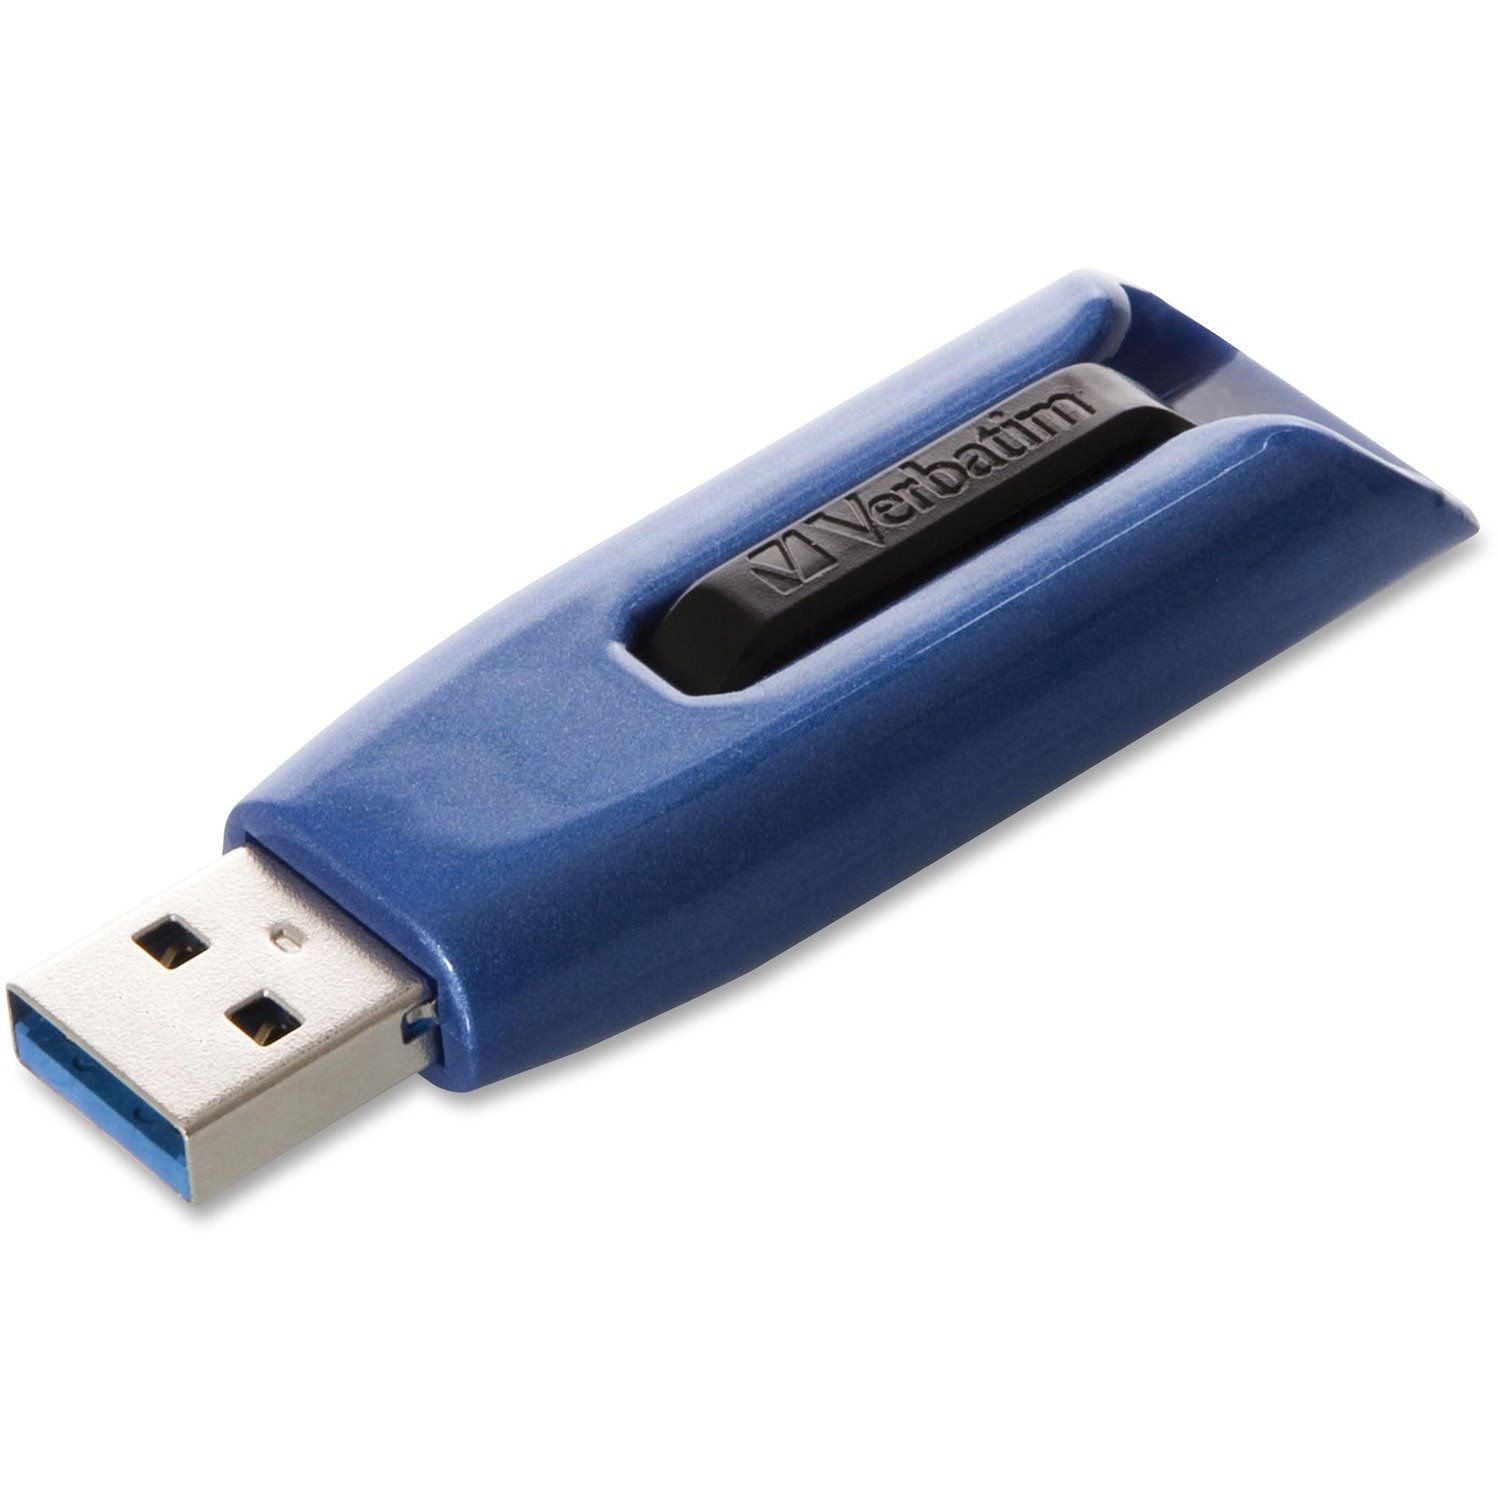 Verbatim Store 'n' Go V3 MAX 32 GB USB 3.0 Flash Drive - Black, Blue